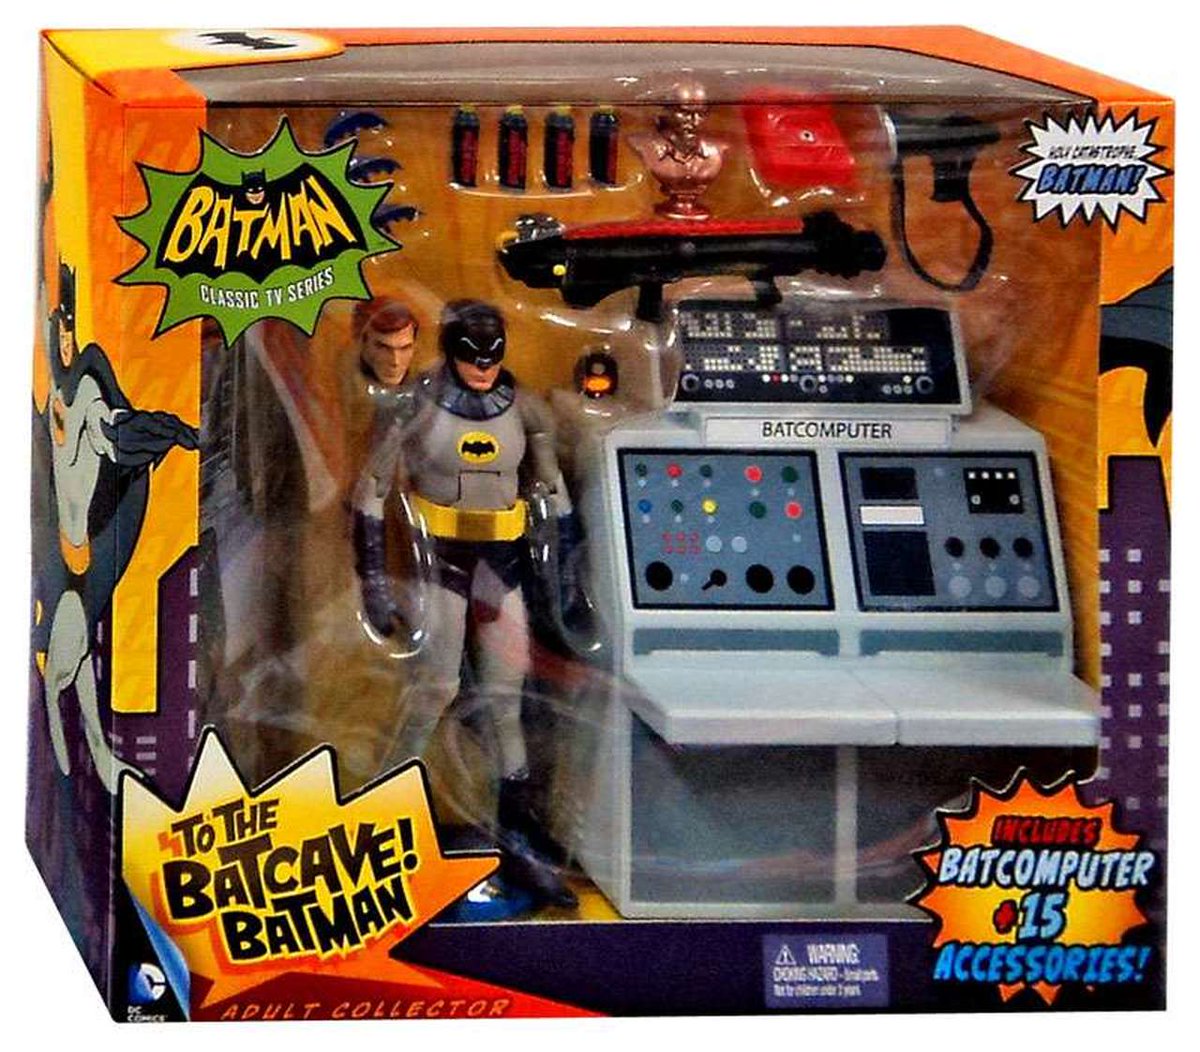 Modern Retro Batcomputer toy